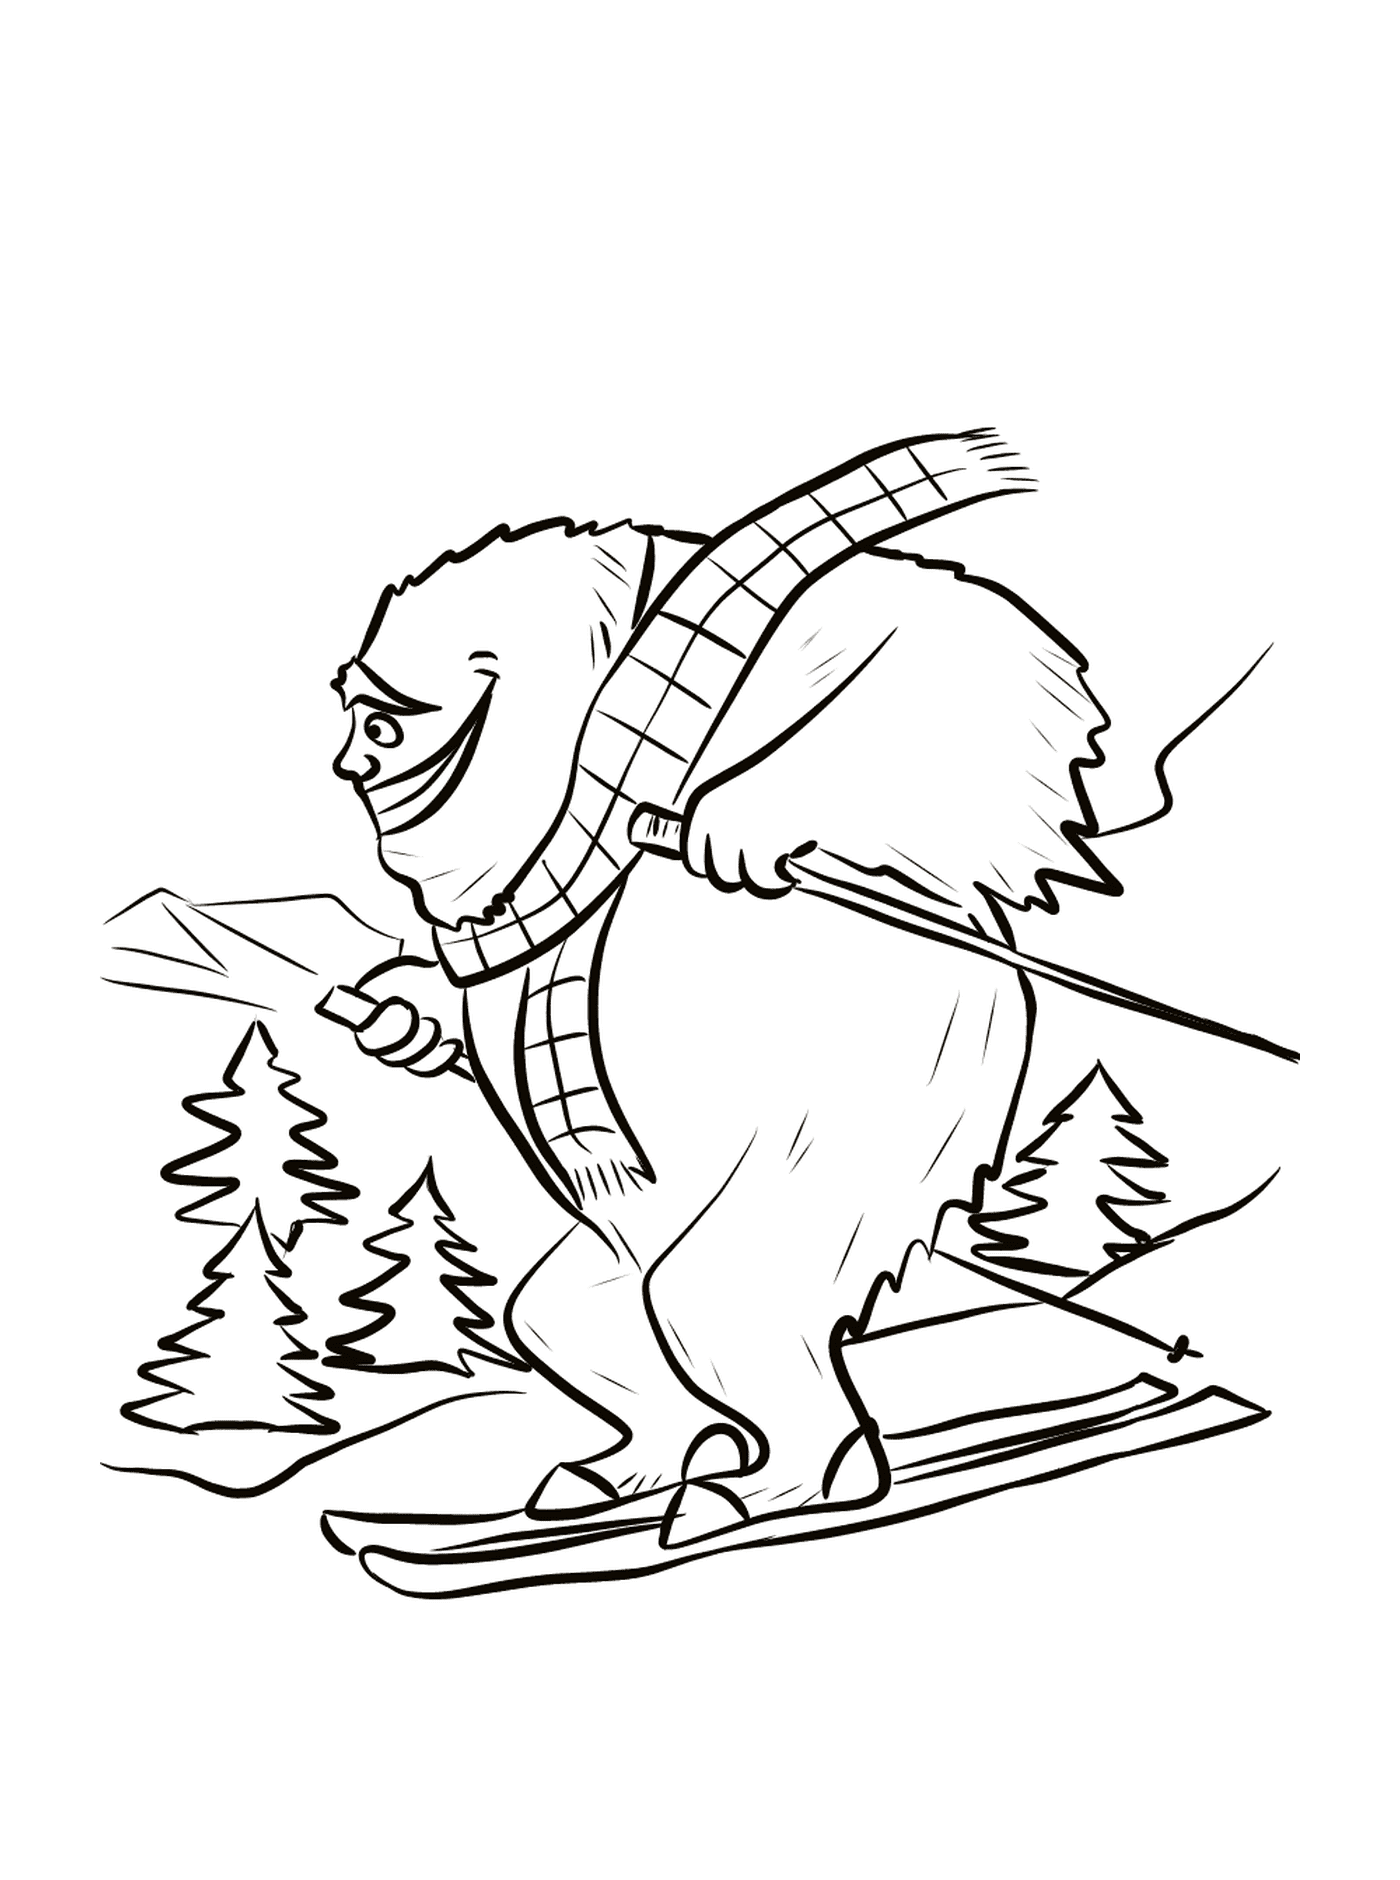  Polar bears skiing 